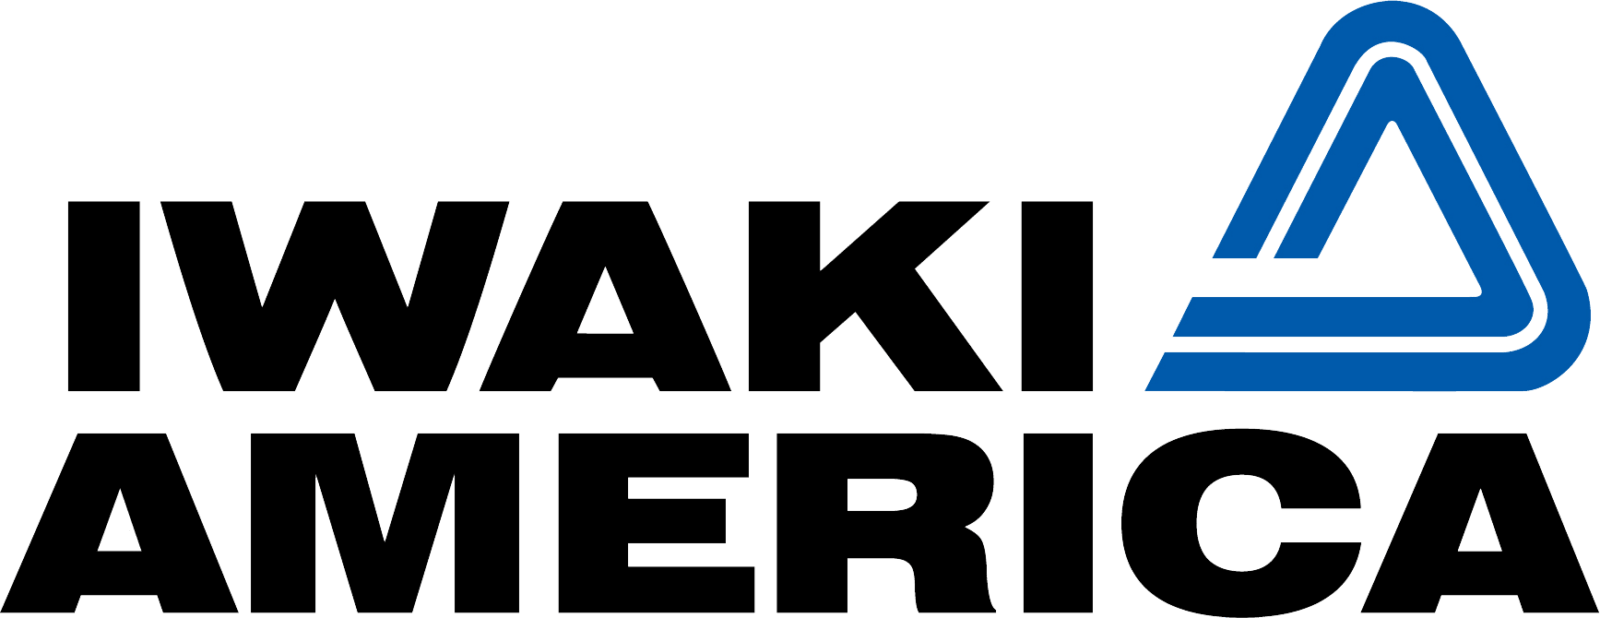 Iwaki America logo